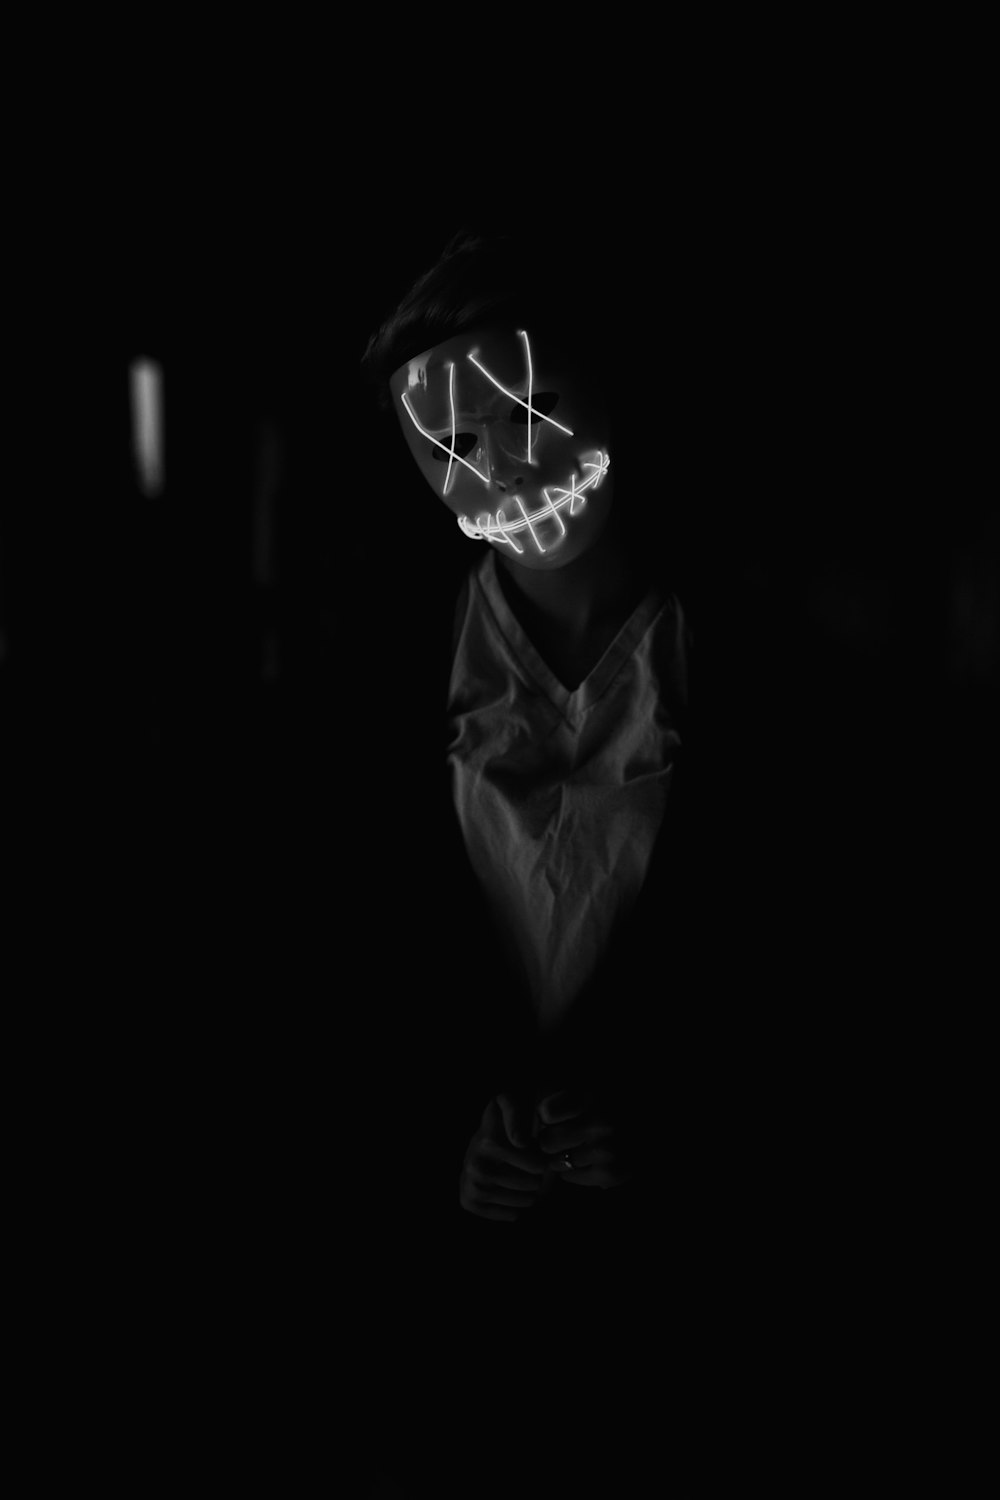 una foto in bianco e nero di una persona che indossa una maschera